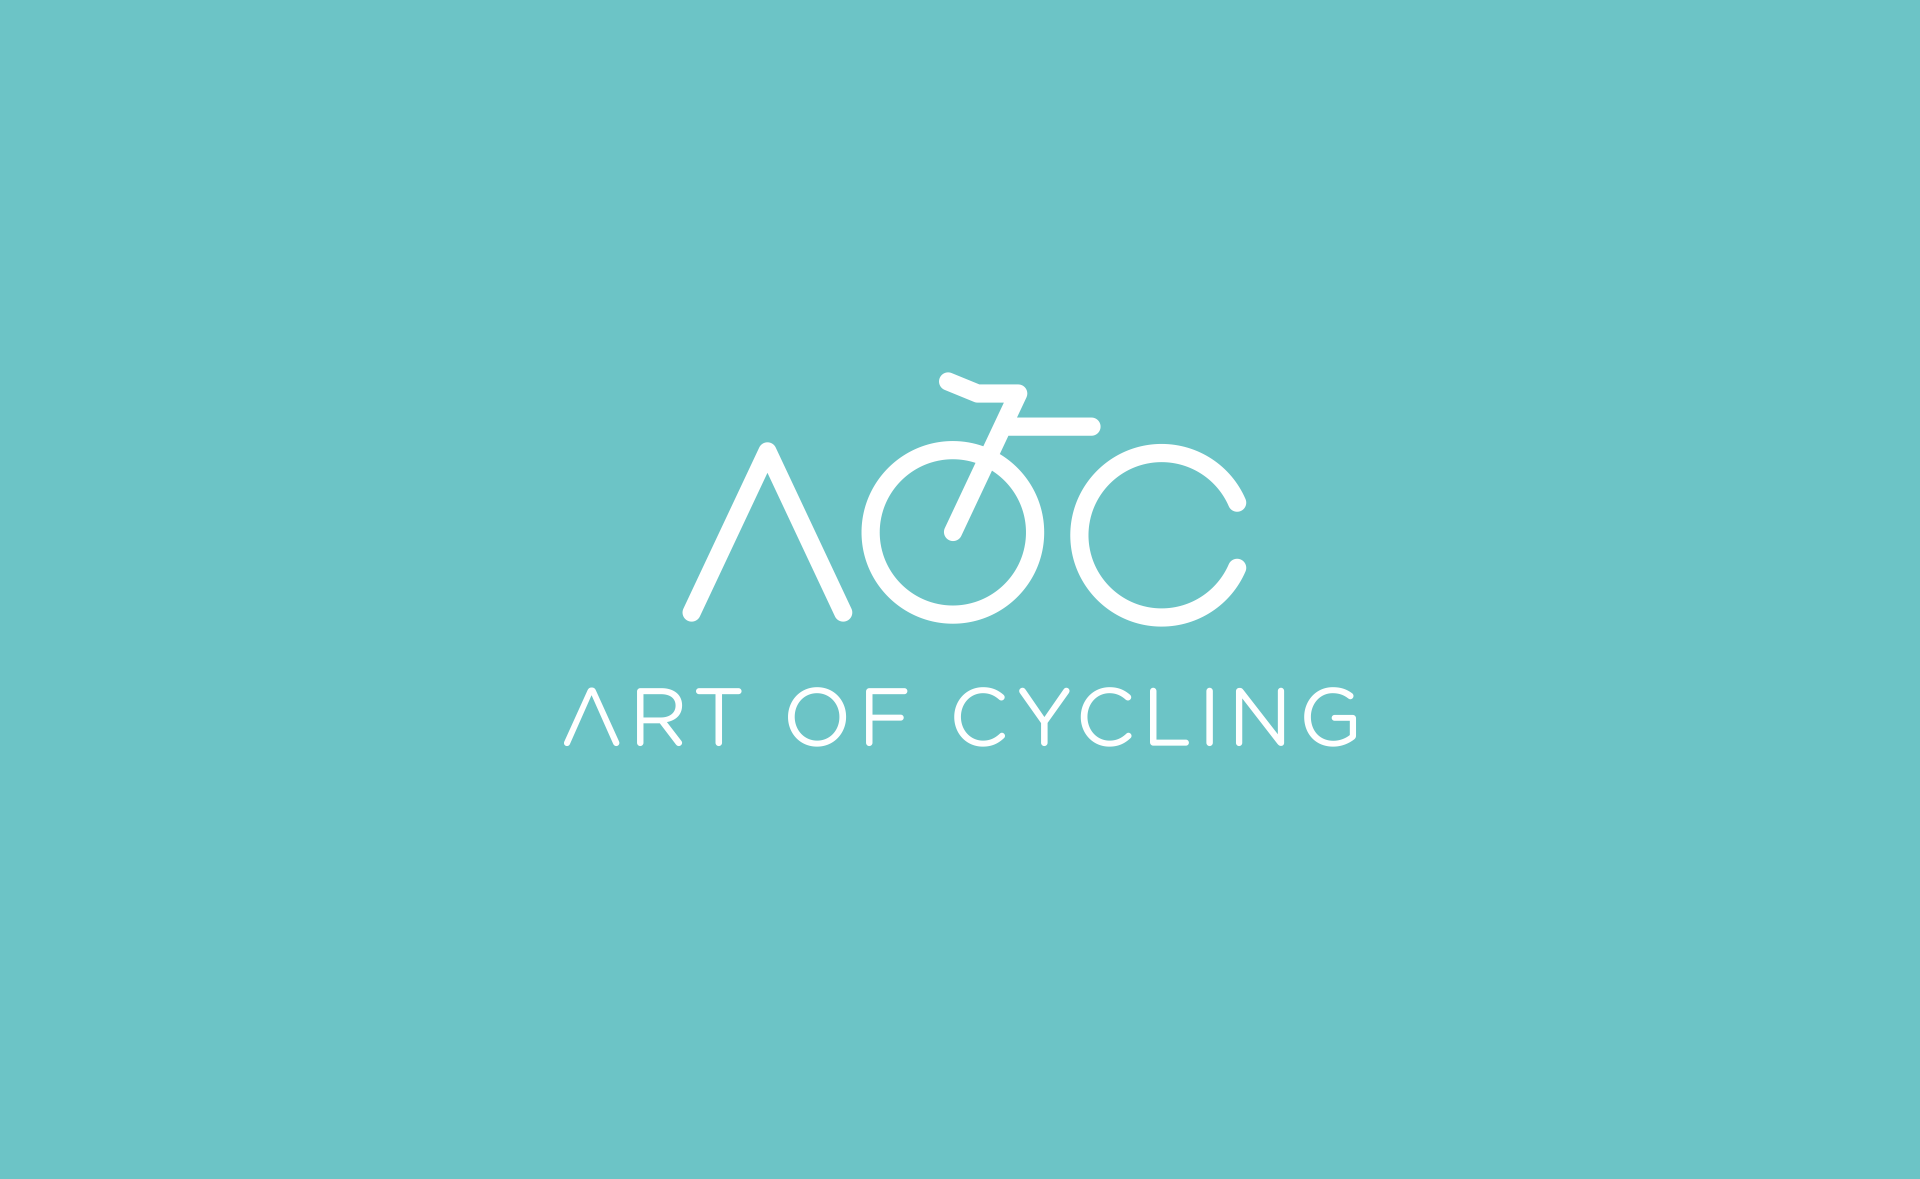 Art of Cycling